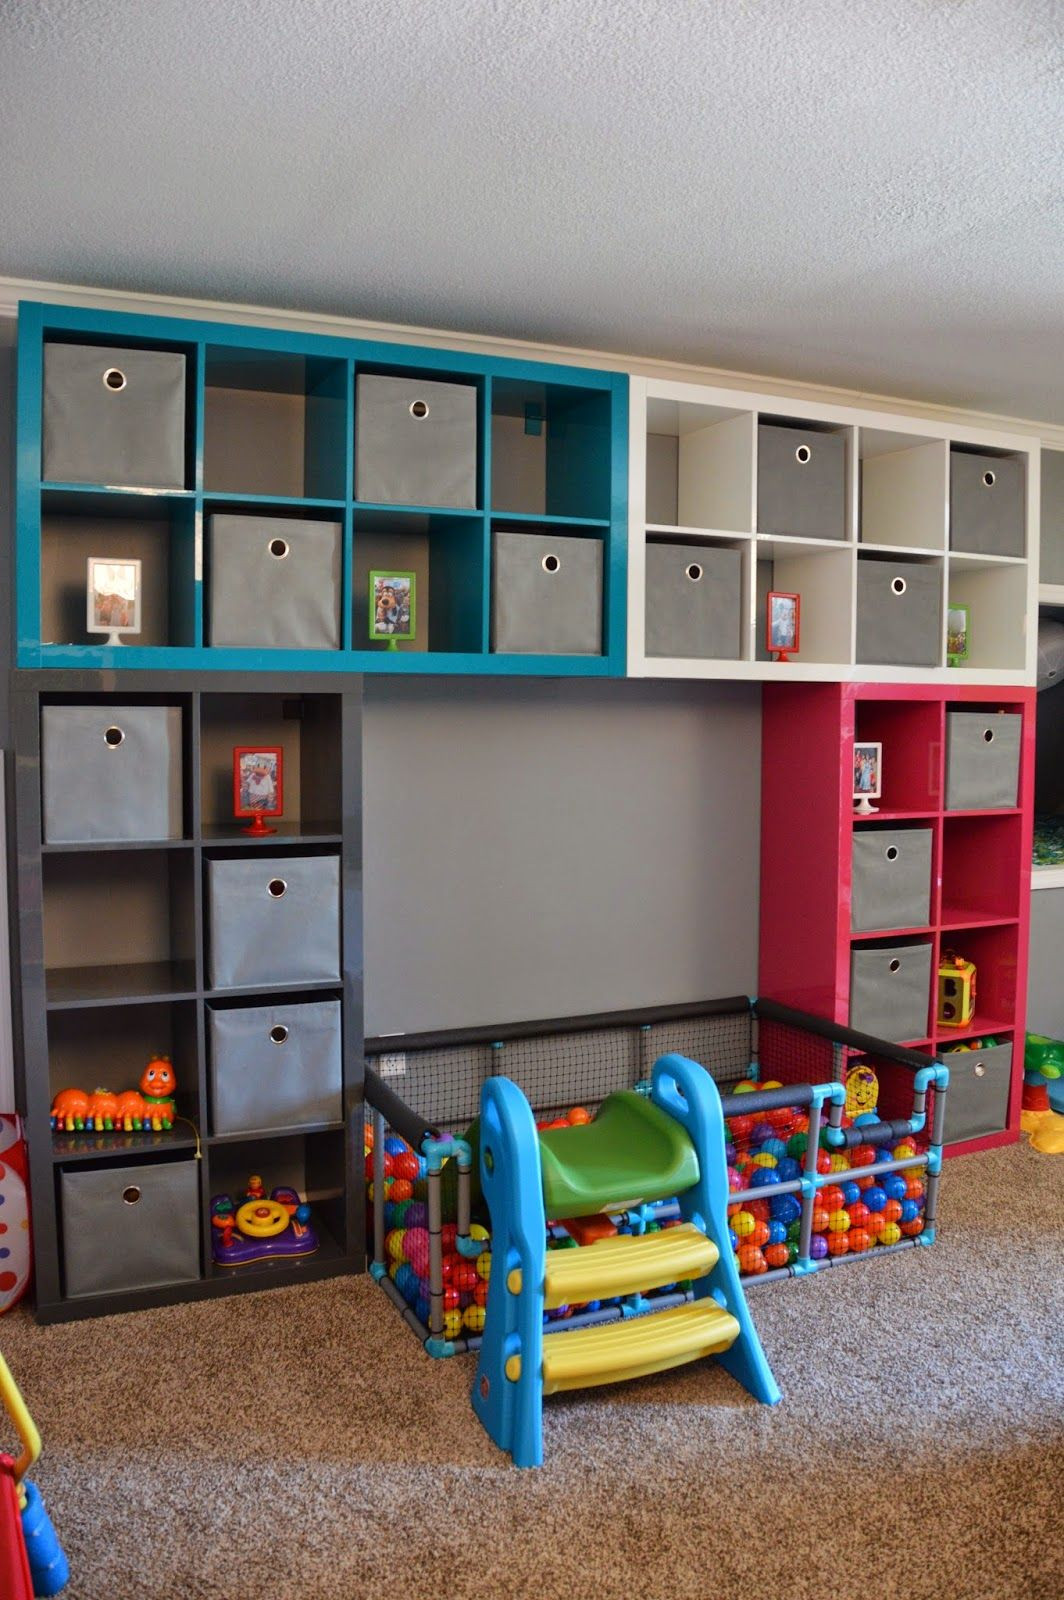 DIY Toy Organizer Ideas
 7 1 Toy Storage Ideas DIY Plans In A Small Space [Your